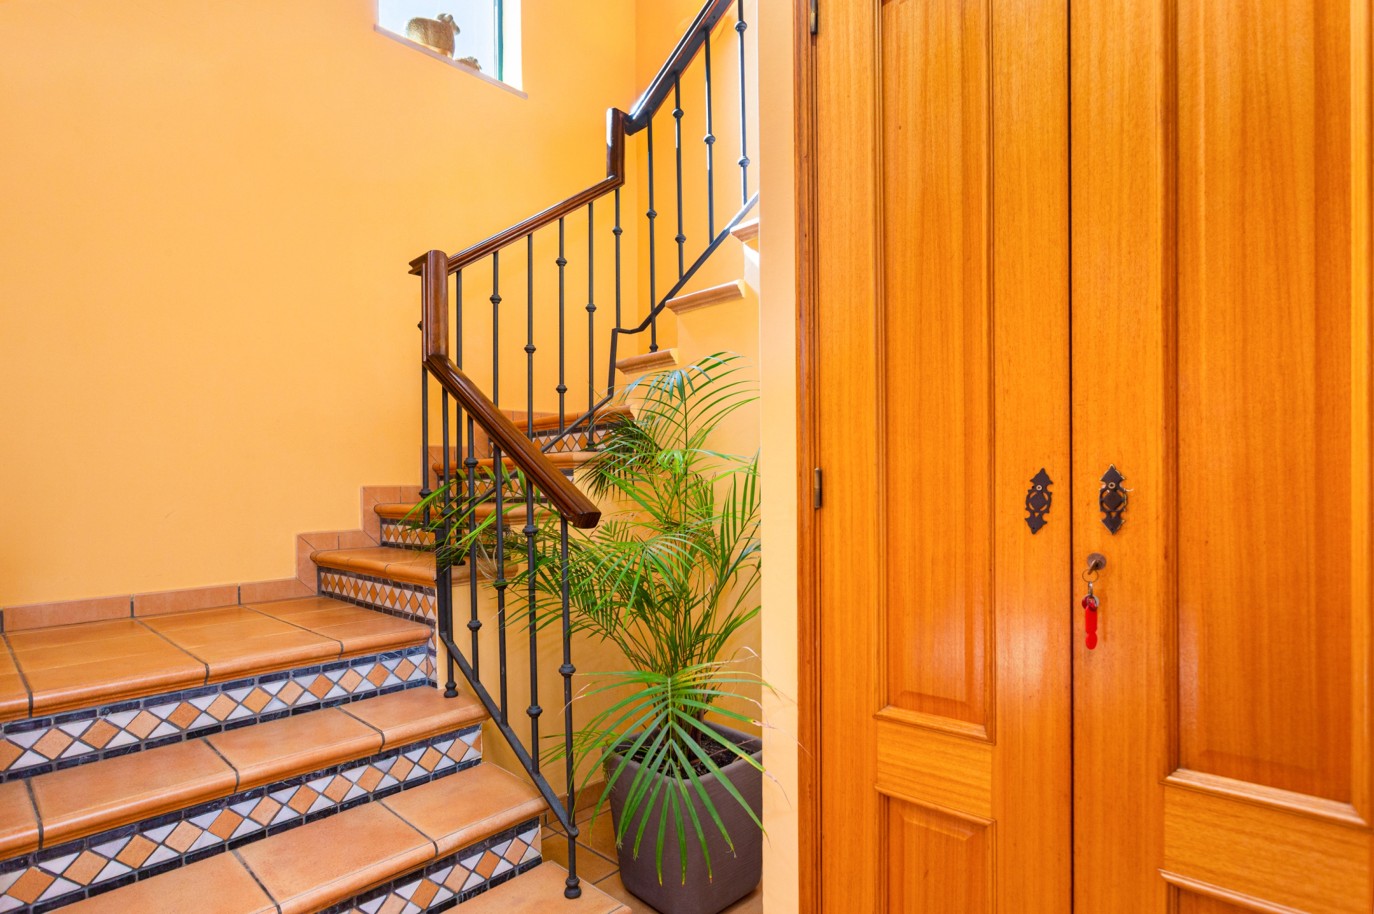 5 Bedroom Villa with 2 Bedroom Annex, for sale, in Alvor, Algarve_220961